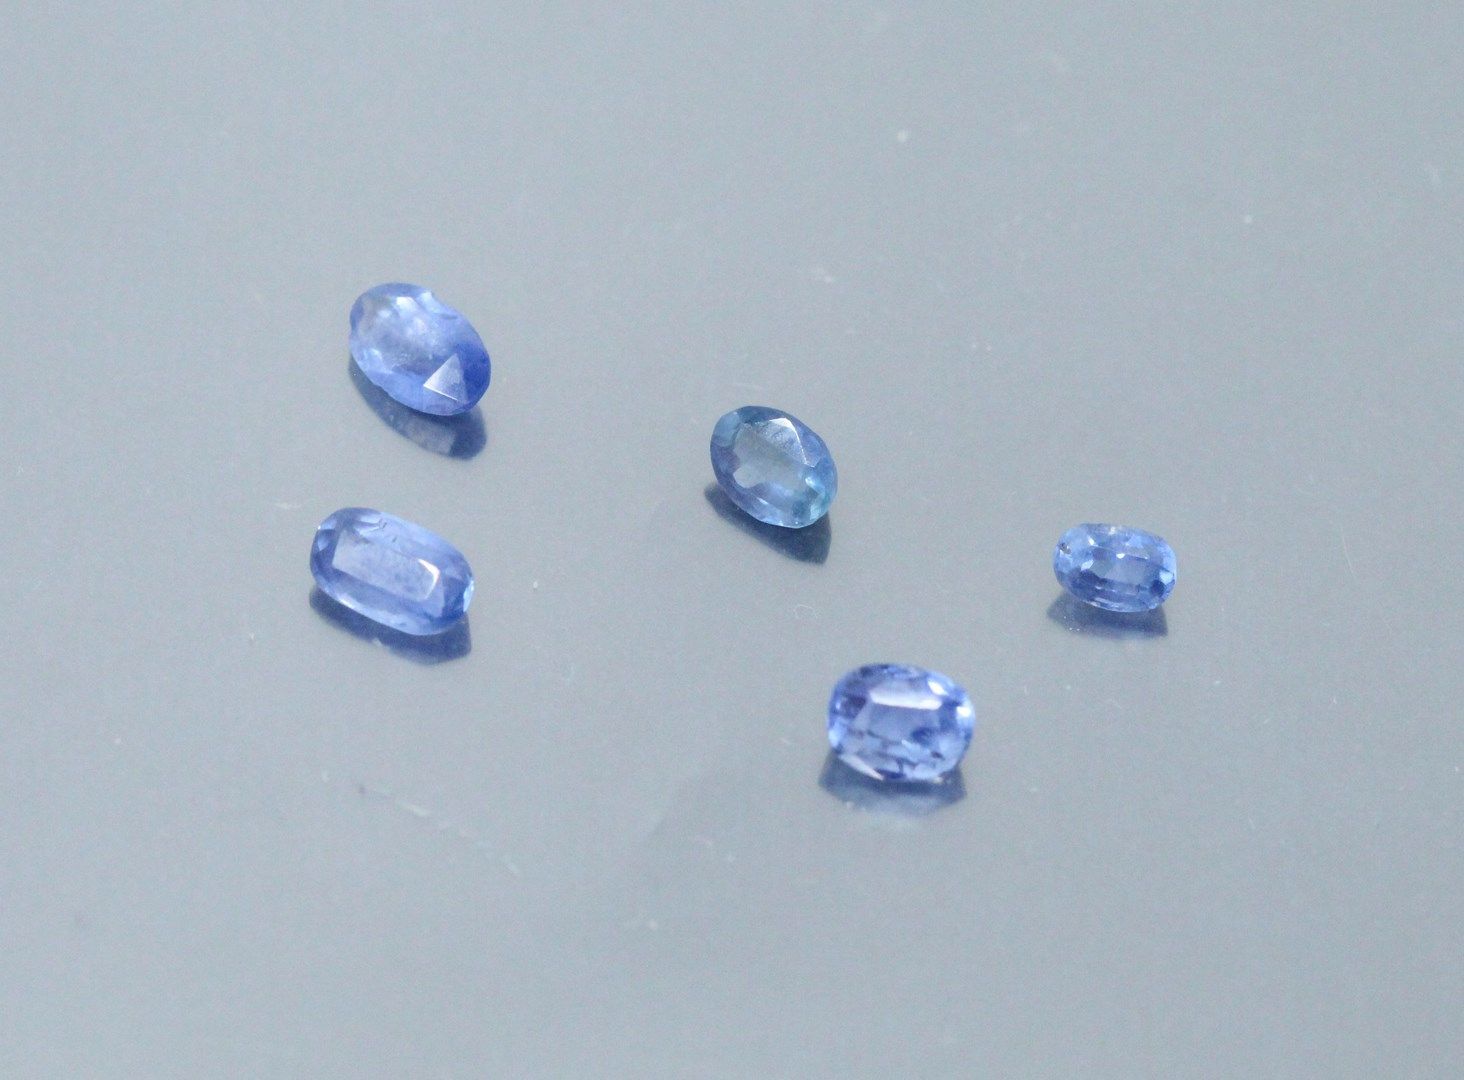 Null 纸上五颗蓝宝石拍品。

锡兰，未加热。

重量：约3.90克拉